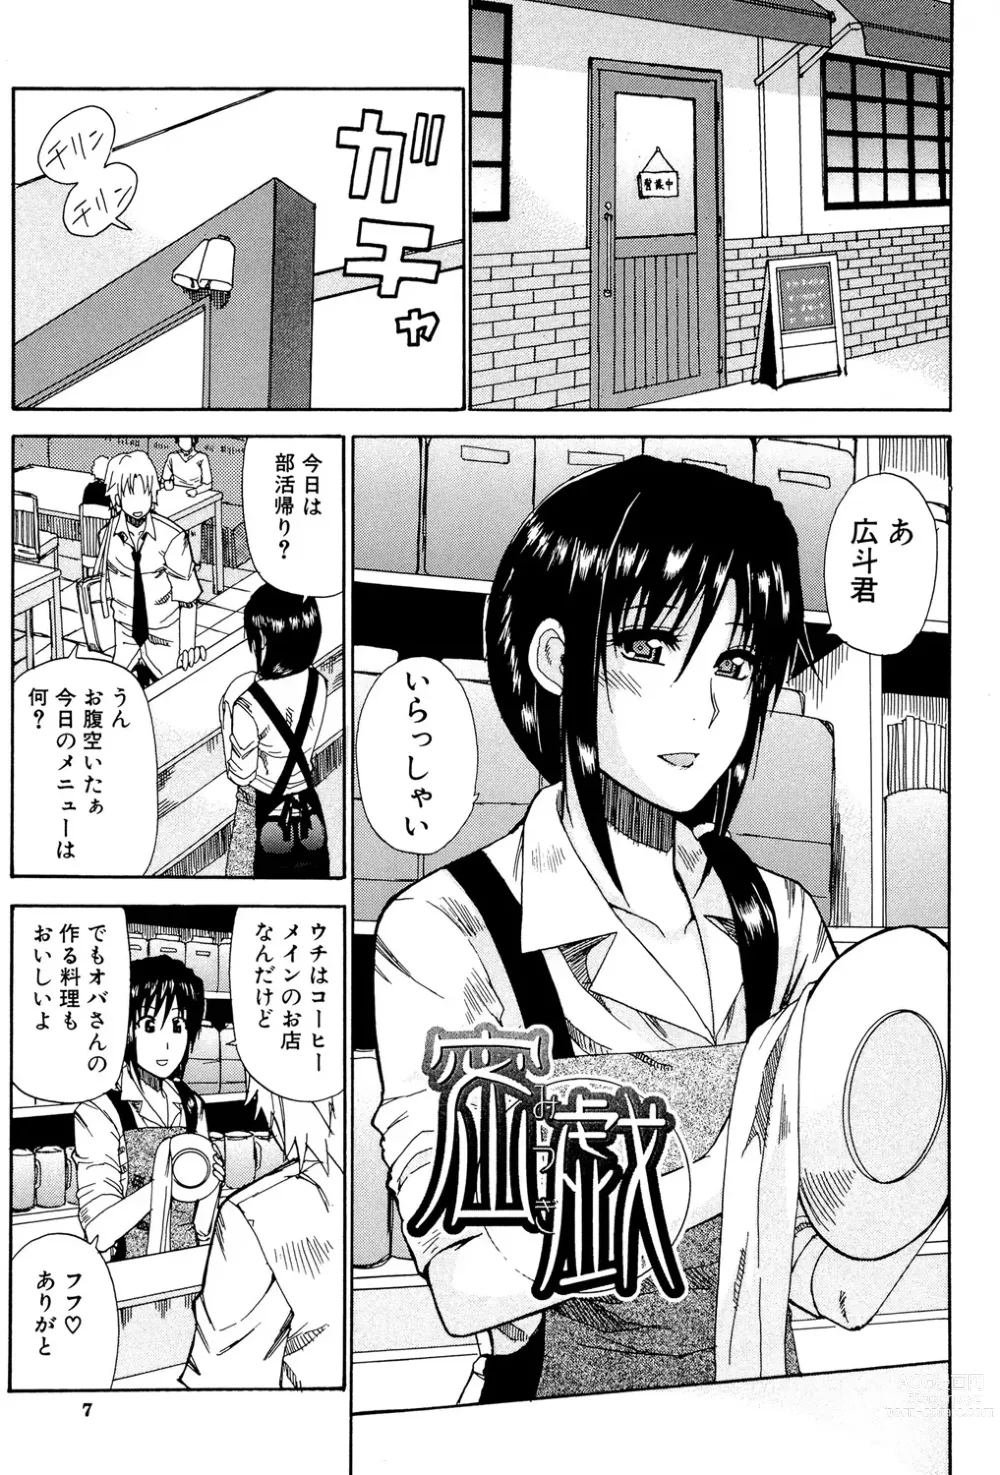 Page 6 of manga Venus Rhapsody